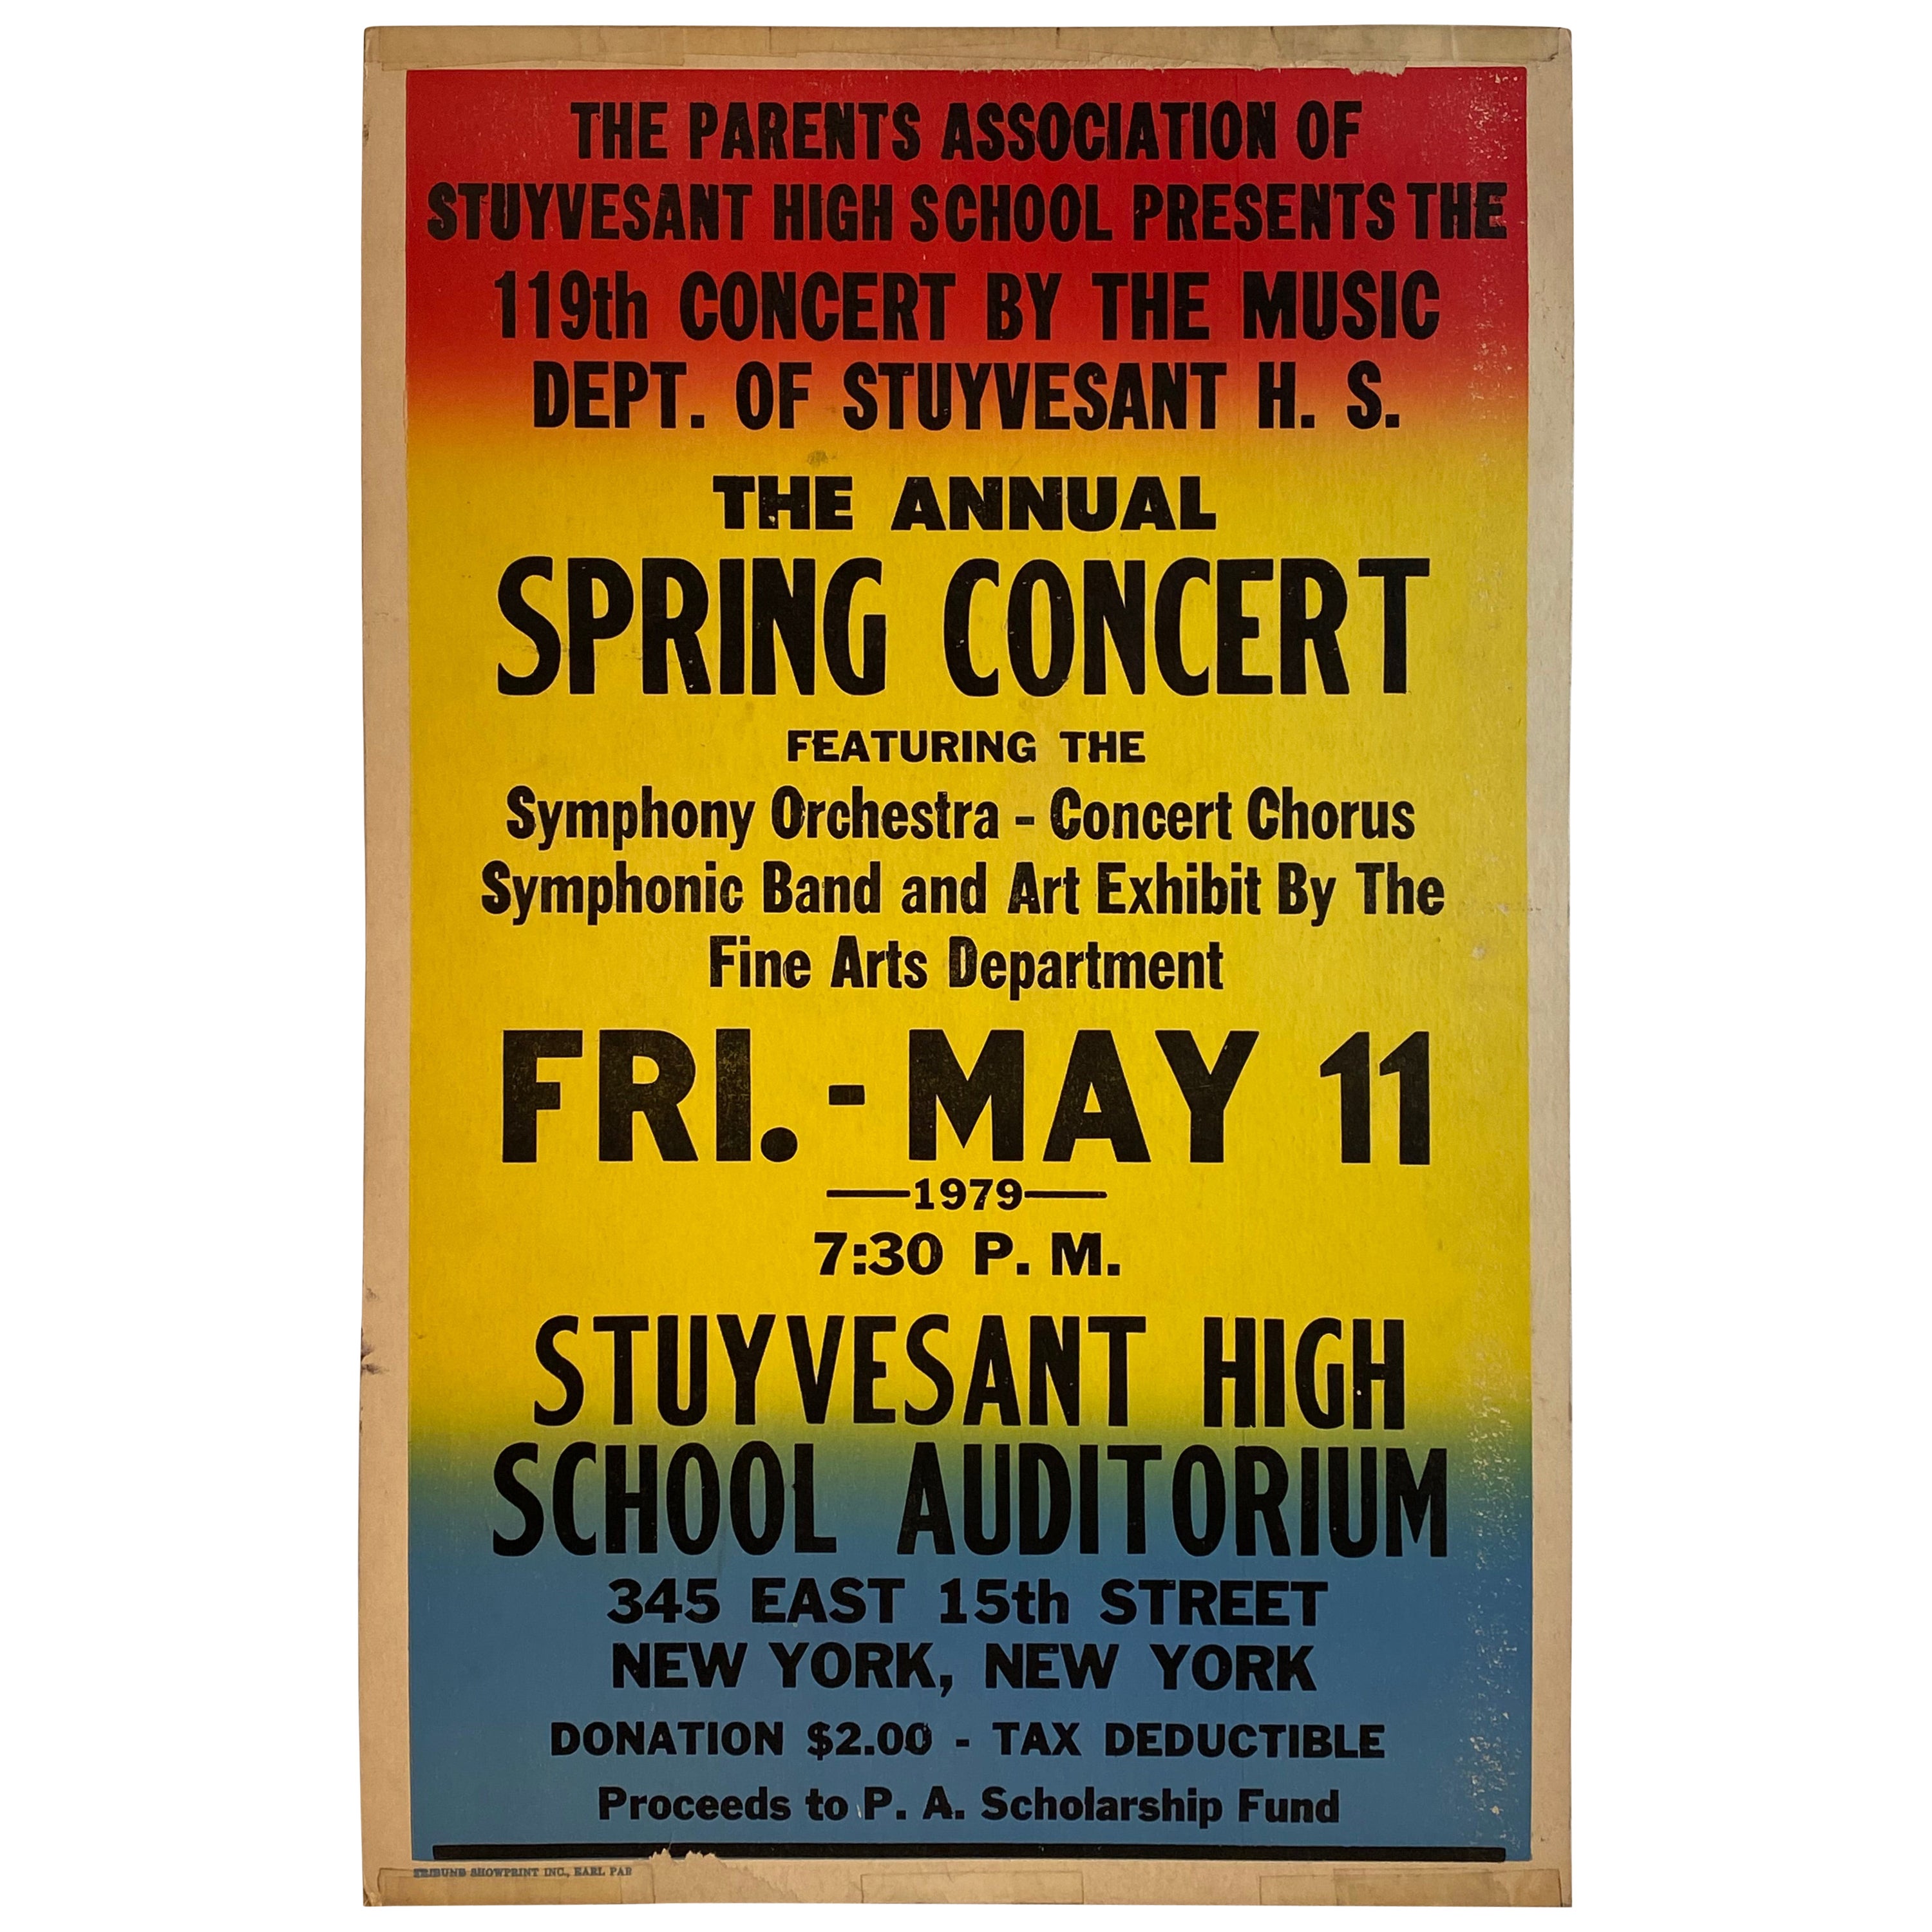 1979 New York City Stuyvesant High School Spring Concert Poster For Sale